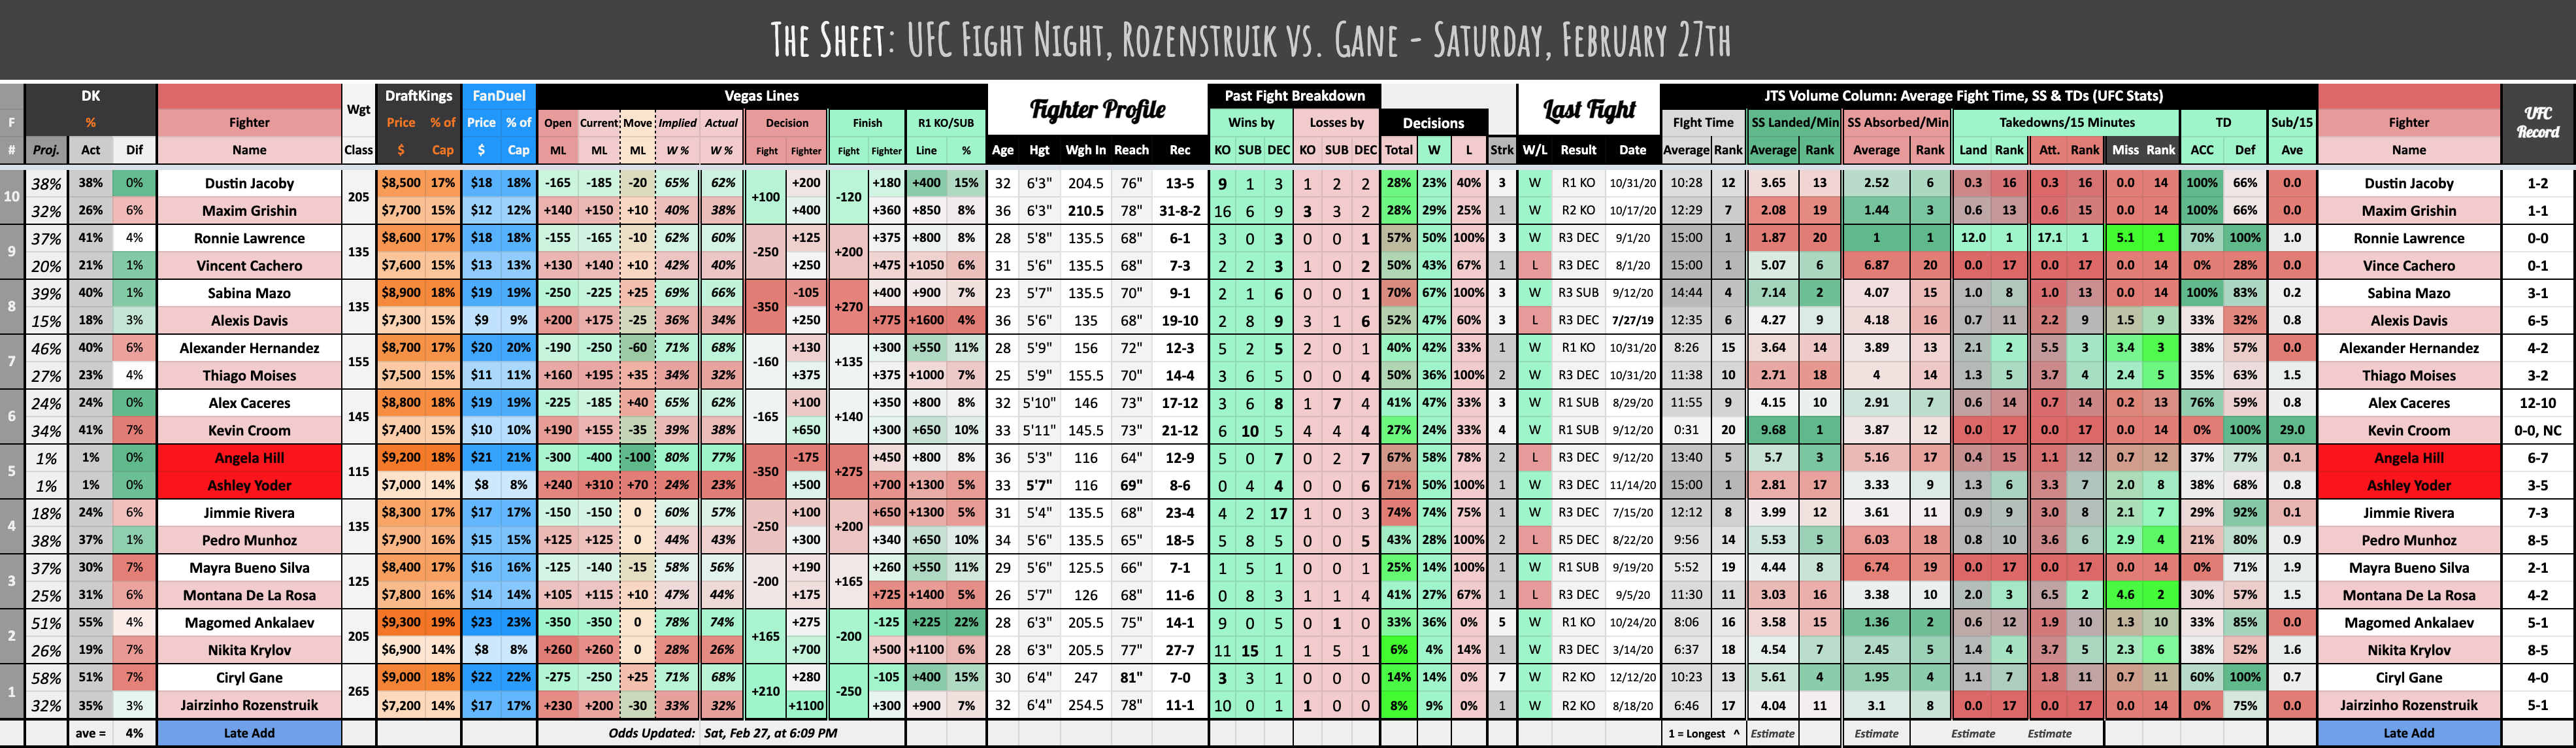 The Sheet: UFC Fight Night, Rozenstruik vs. Gane - Saturday, February 27th